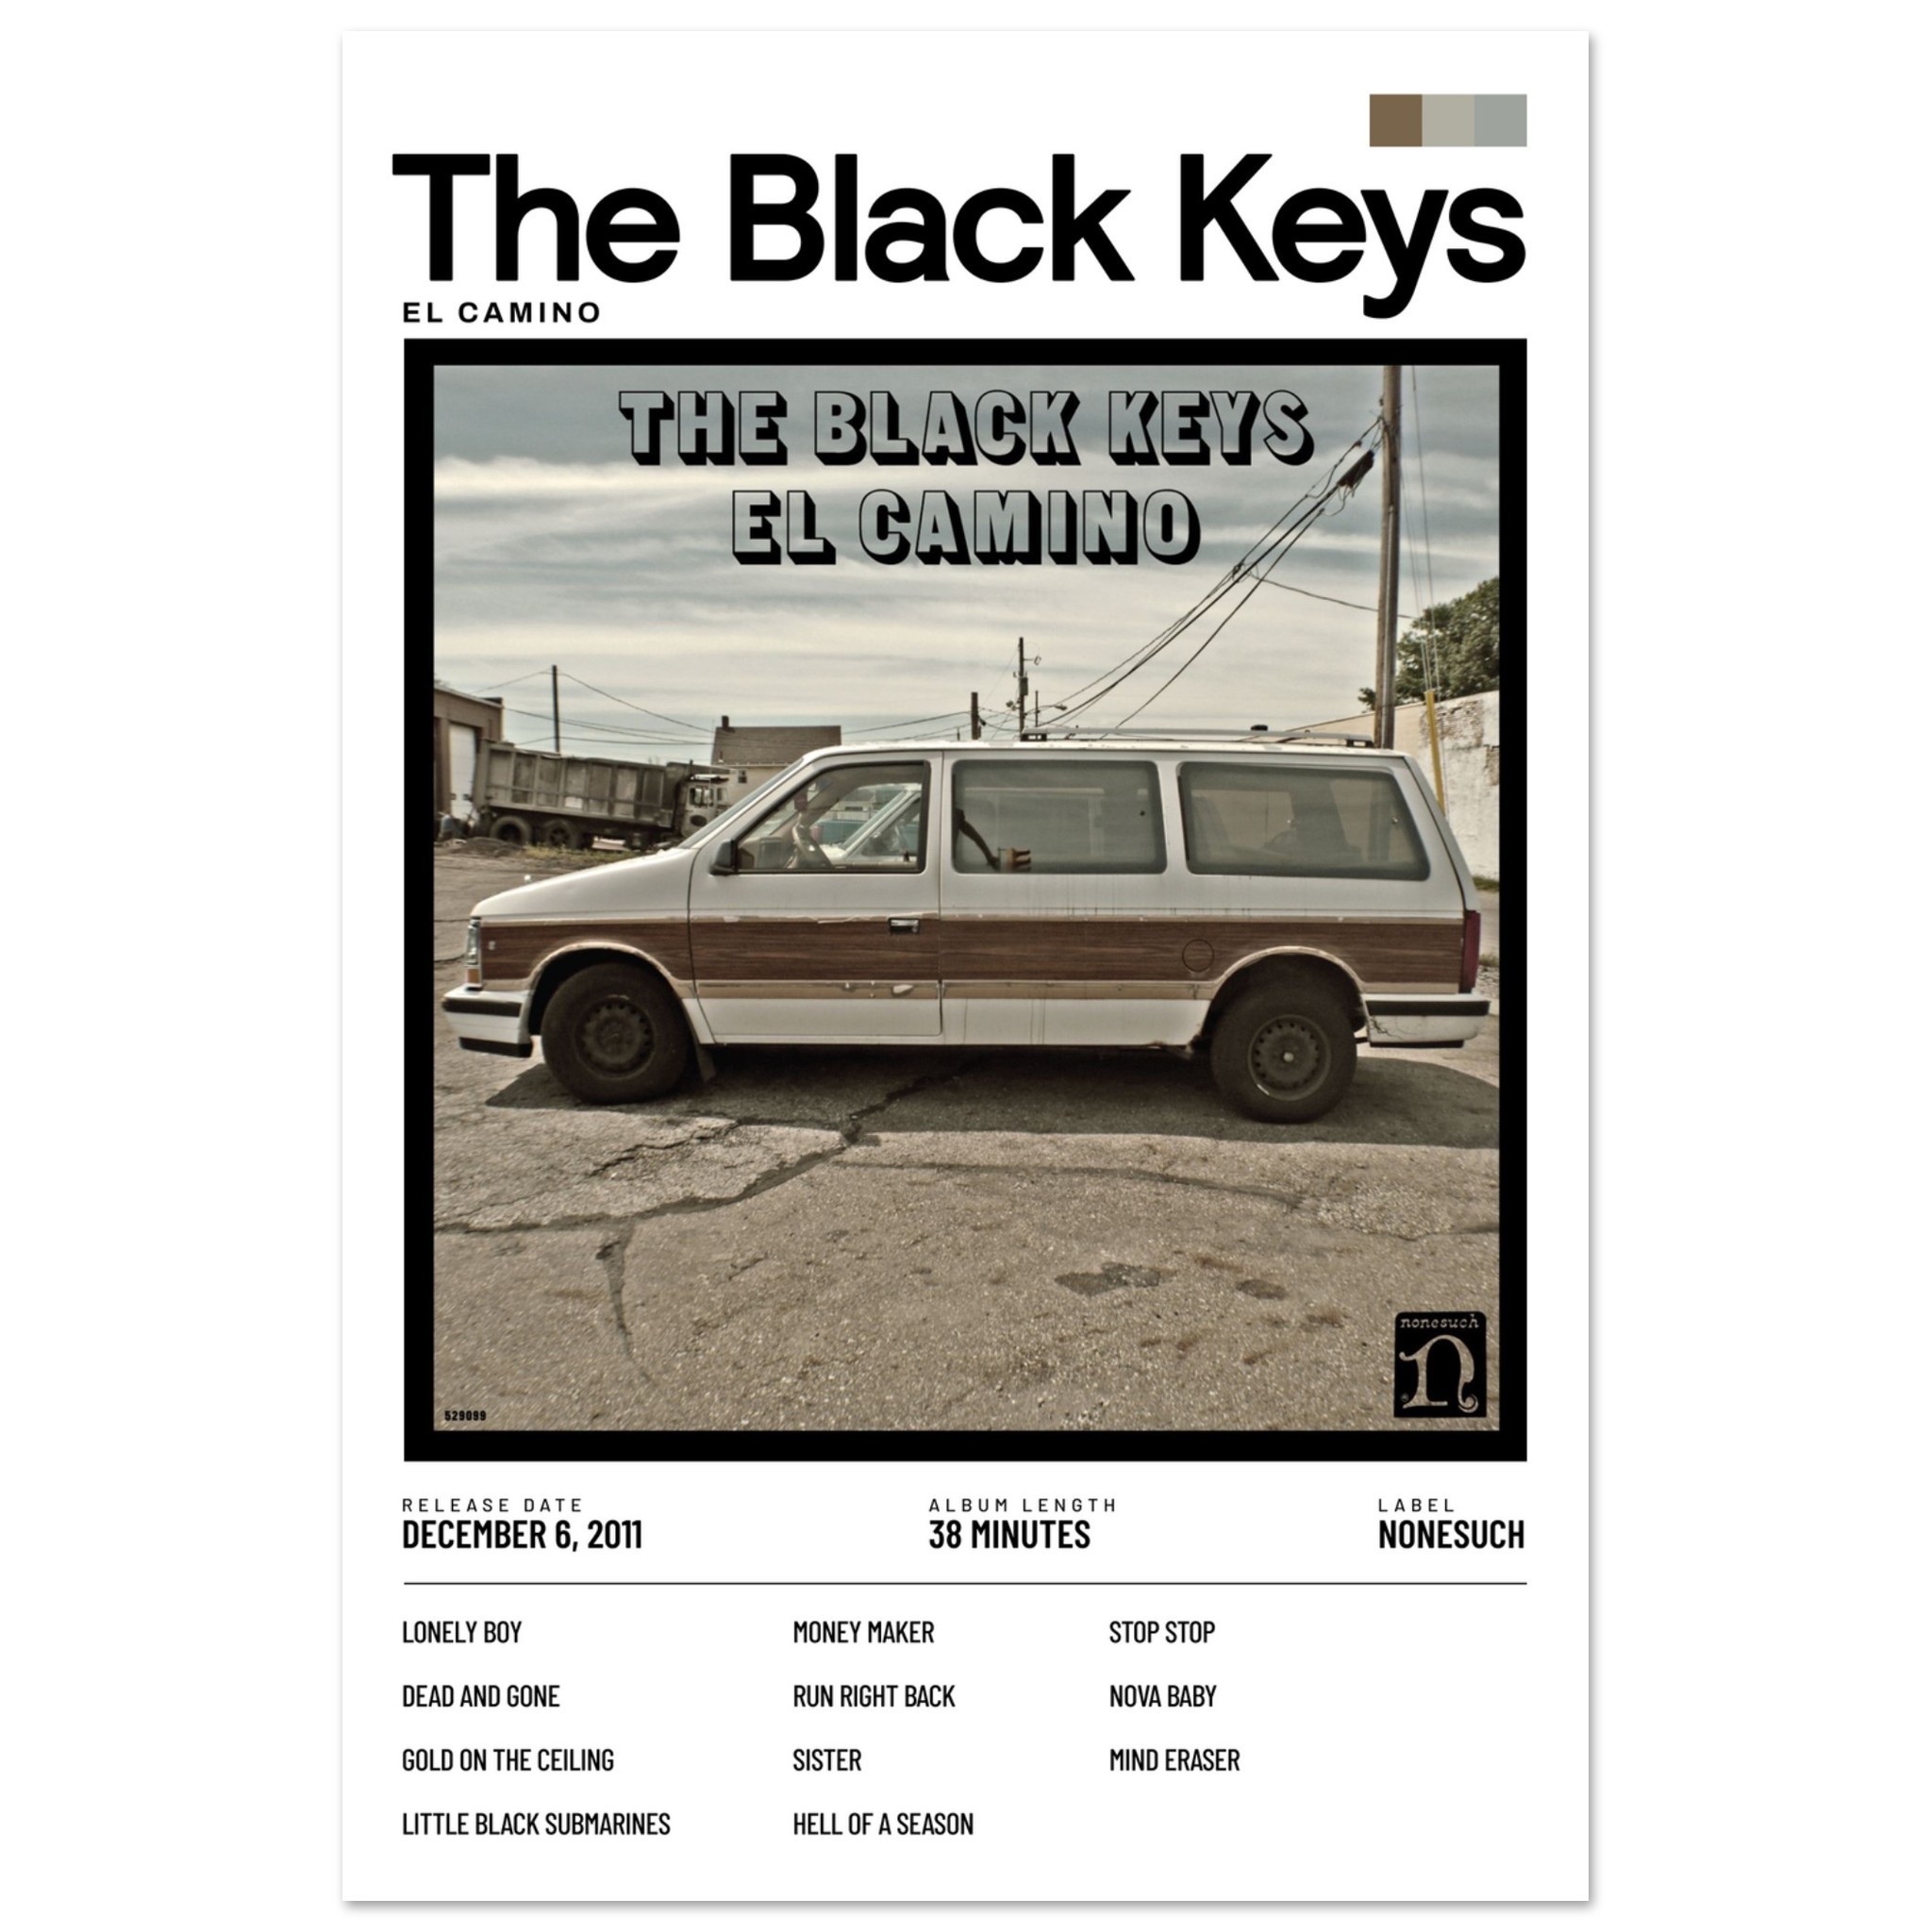 The Black Keys – El Camino